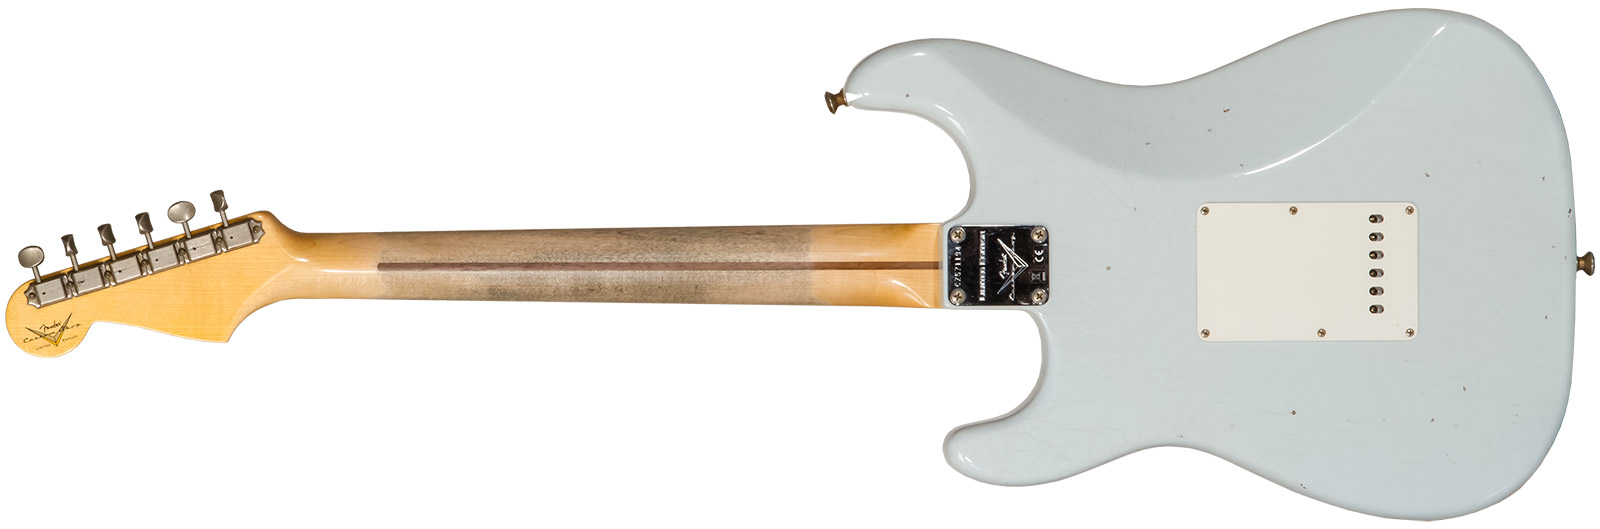 Fender Custom Shop Strat Tomatillo Special 3s Trem Mn #cz571194 - Journeyman Relic Aged Sonic Blue - Elektrische gitaar in Str-vorm - Variation 1